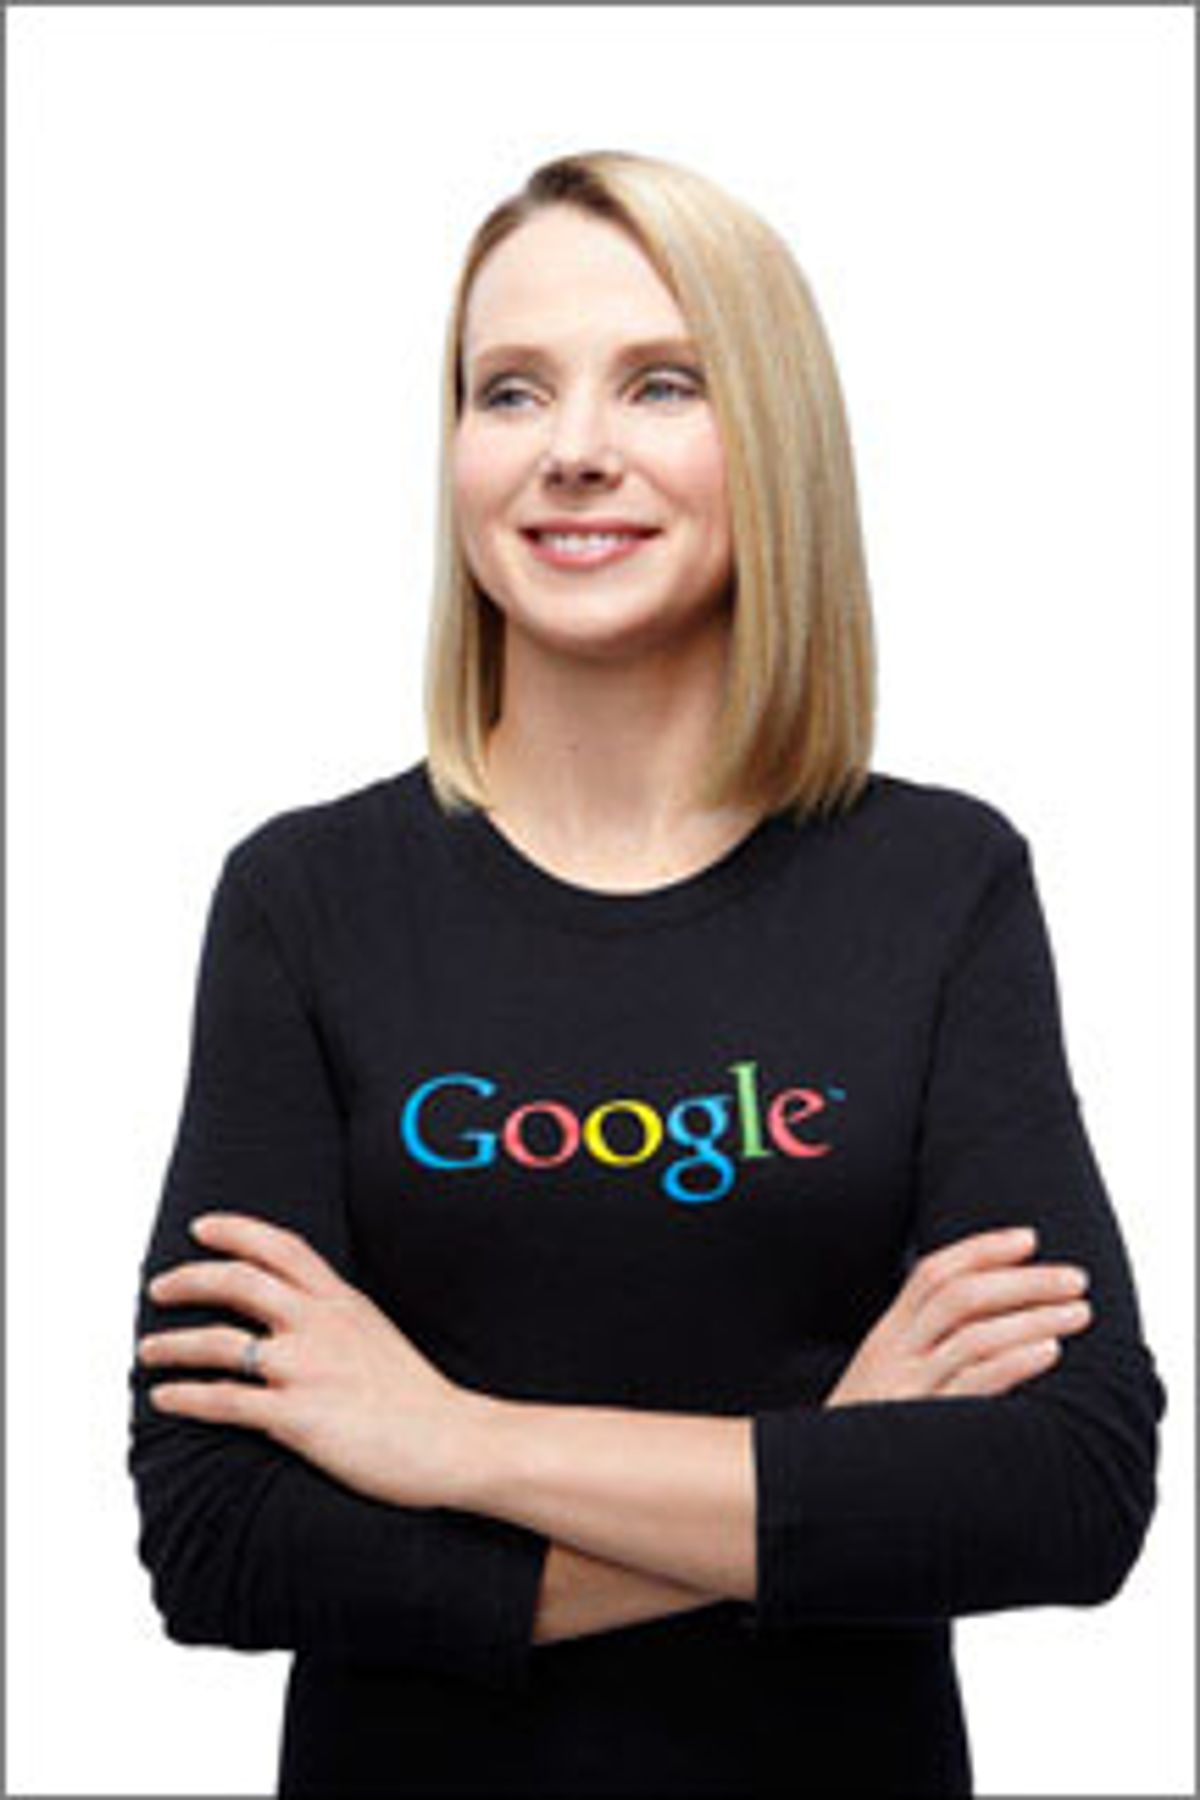 Google's Marissa Mayer Nabs Yahoo's Top Spot